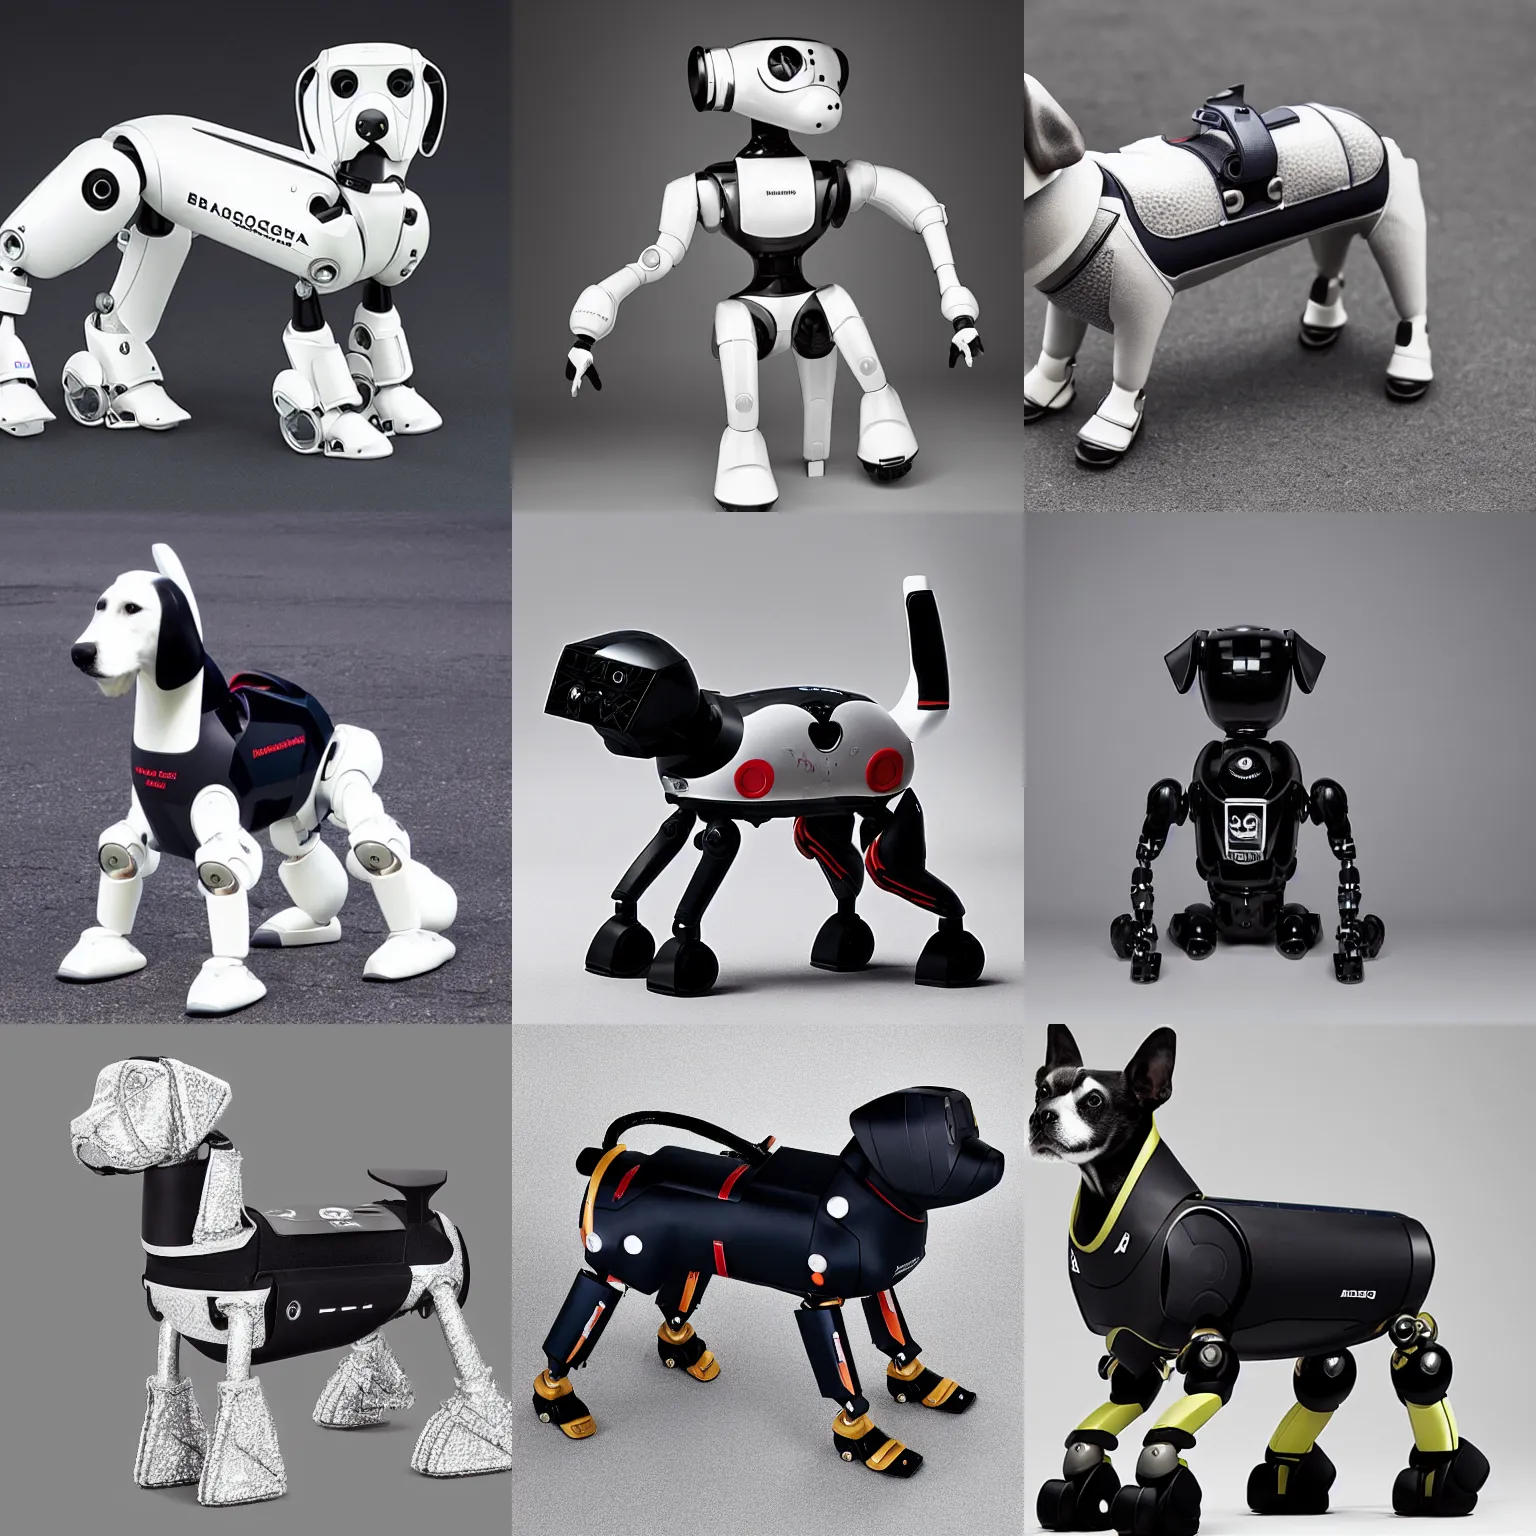 Prompt: md - 6 3 robo - dog designed by balenciaga